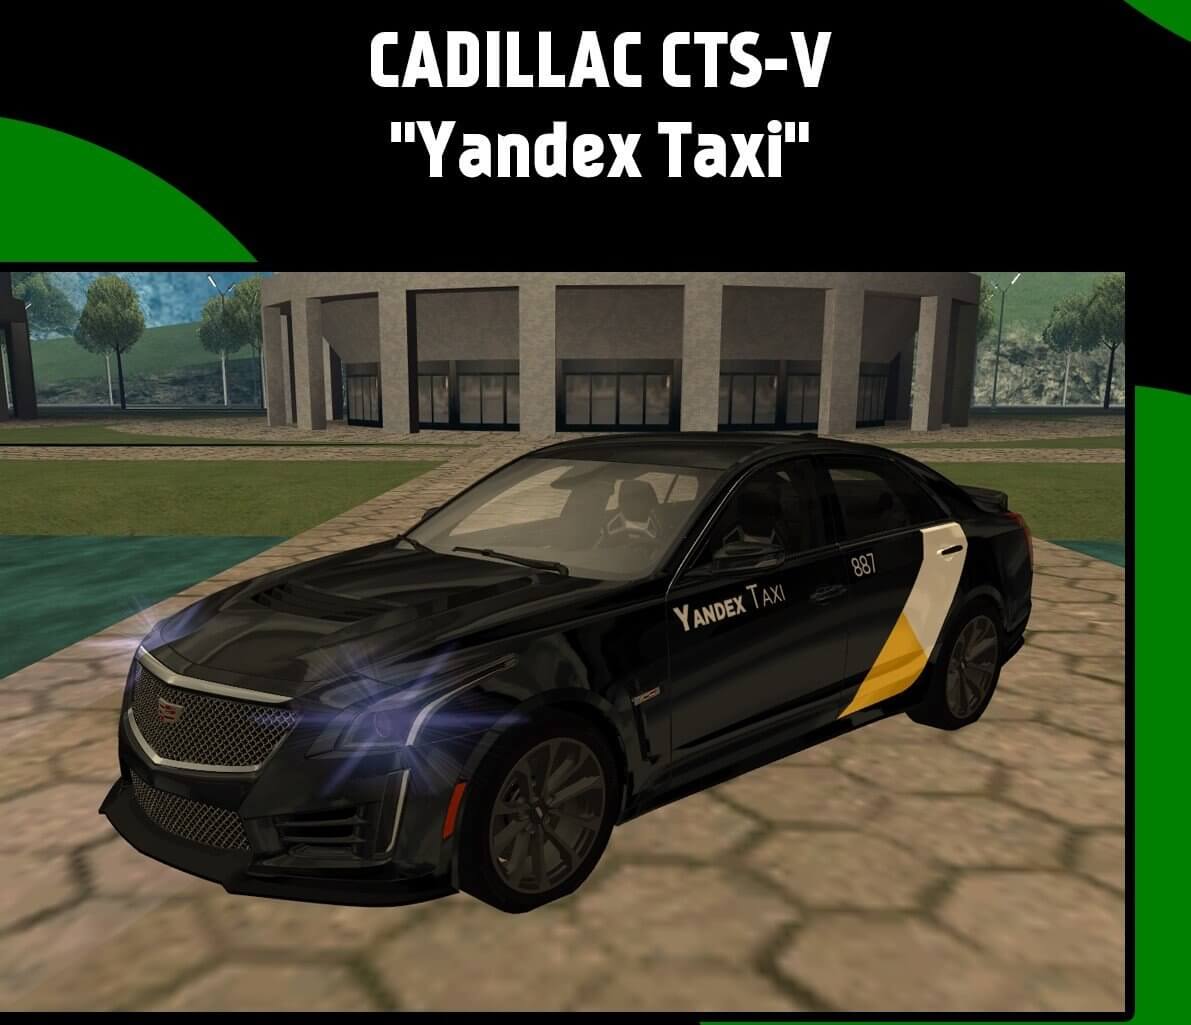 Cadillac CTS-V “Yandex Taxi